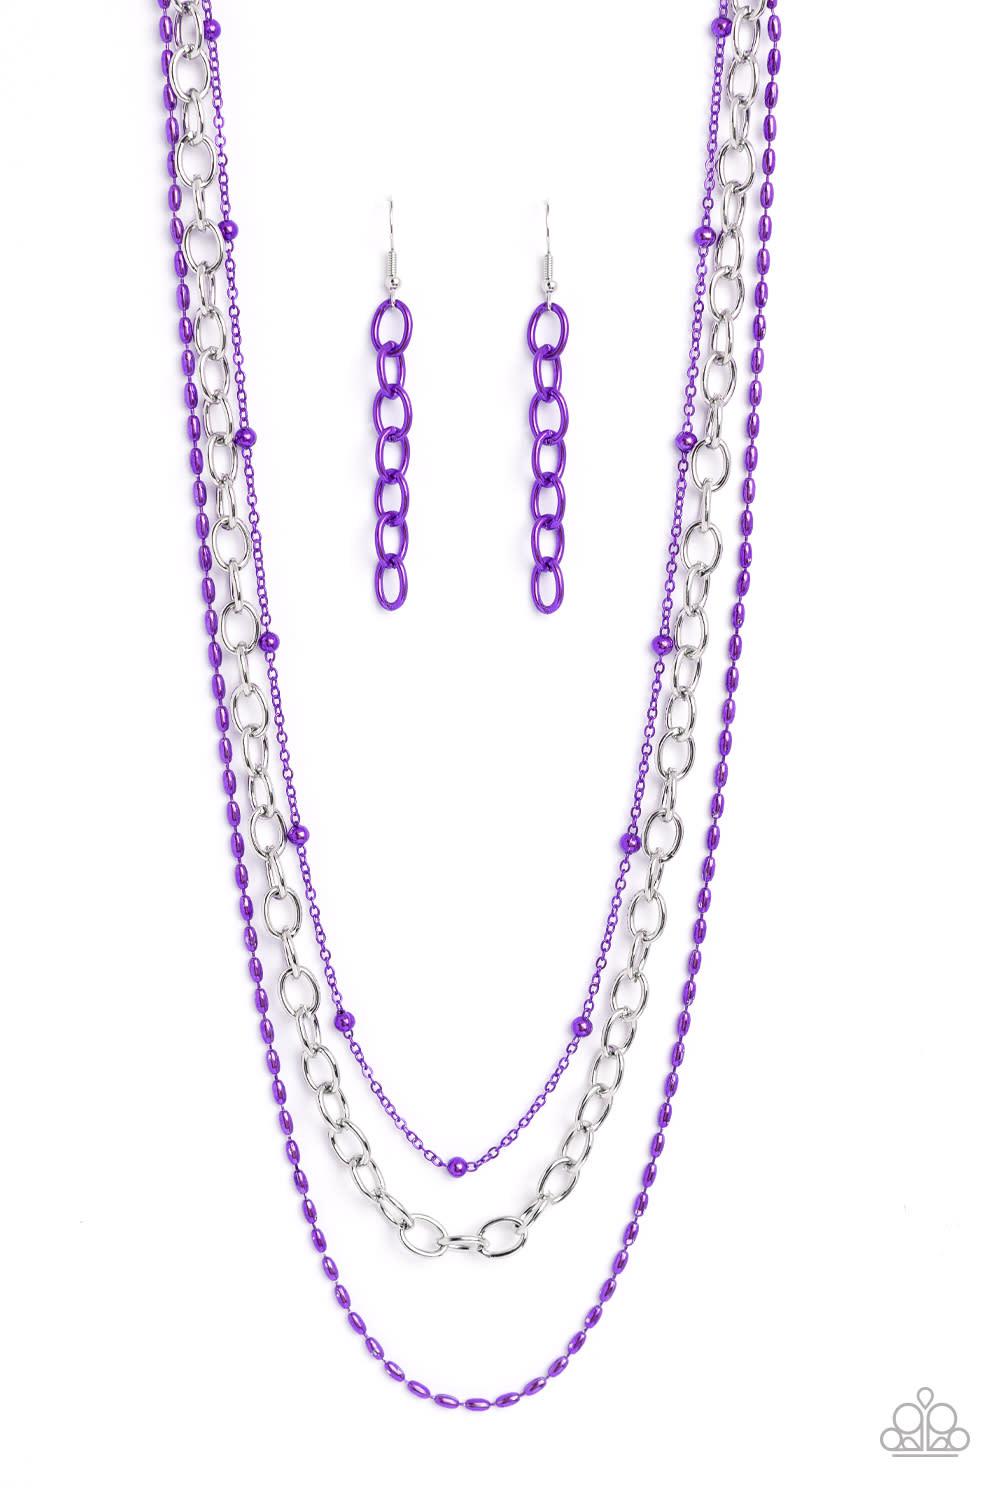 Mardi Gras Mayhem Purple Necklace - Paparazzi Accessories- lightbox - CarasShop.com - $5 Jewelry by Cara Jewels